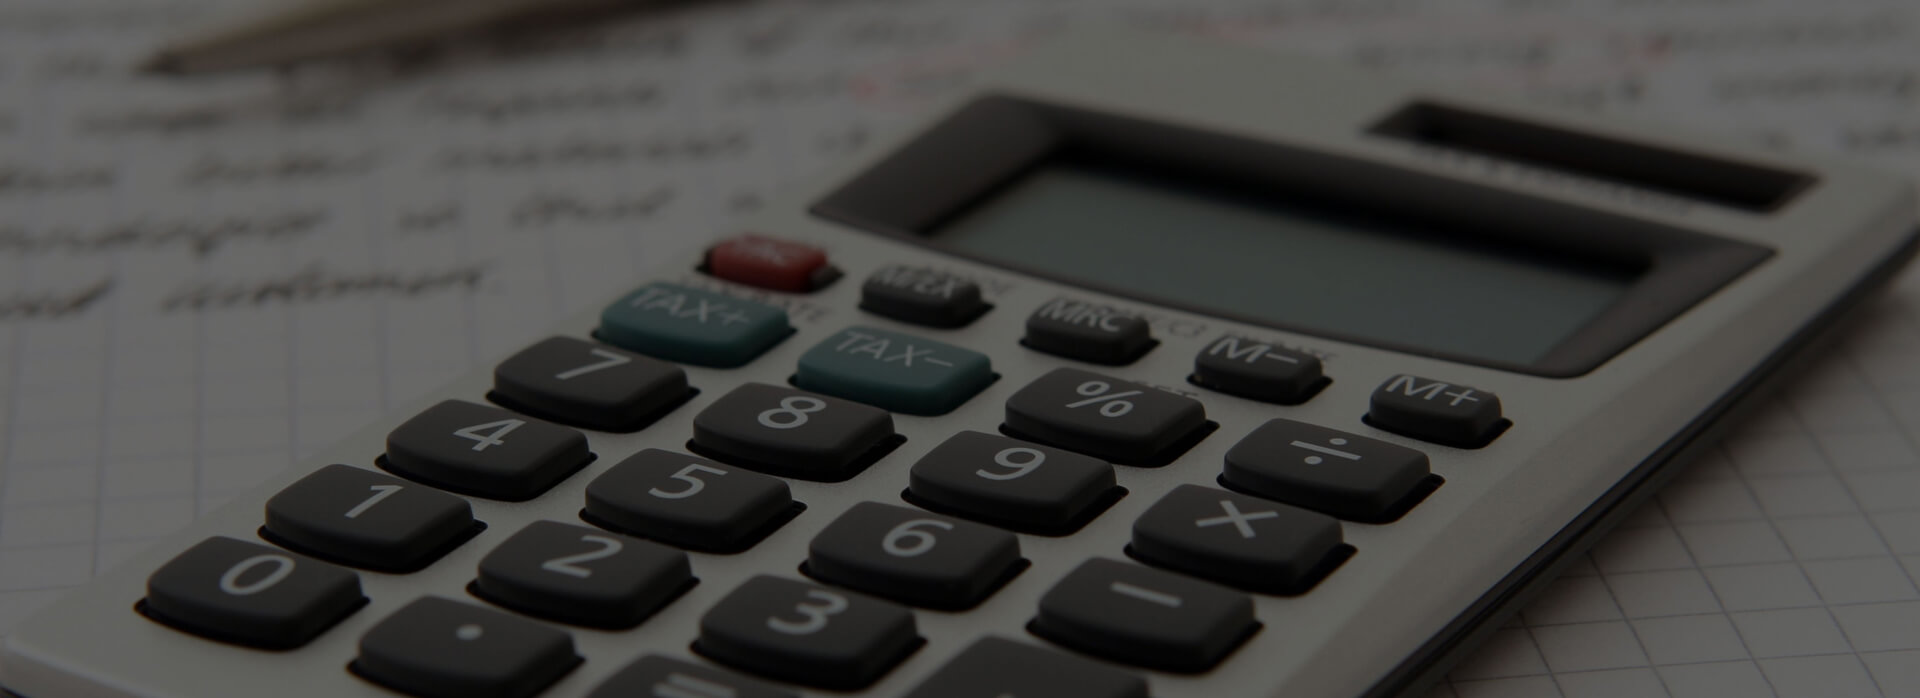 Hawaii Tax Refund Calculator